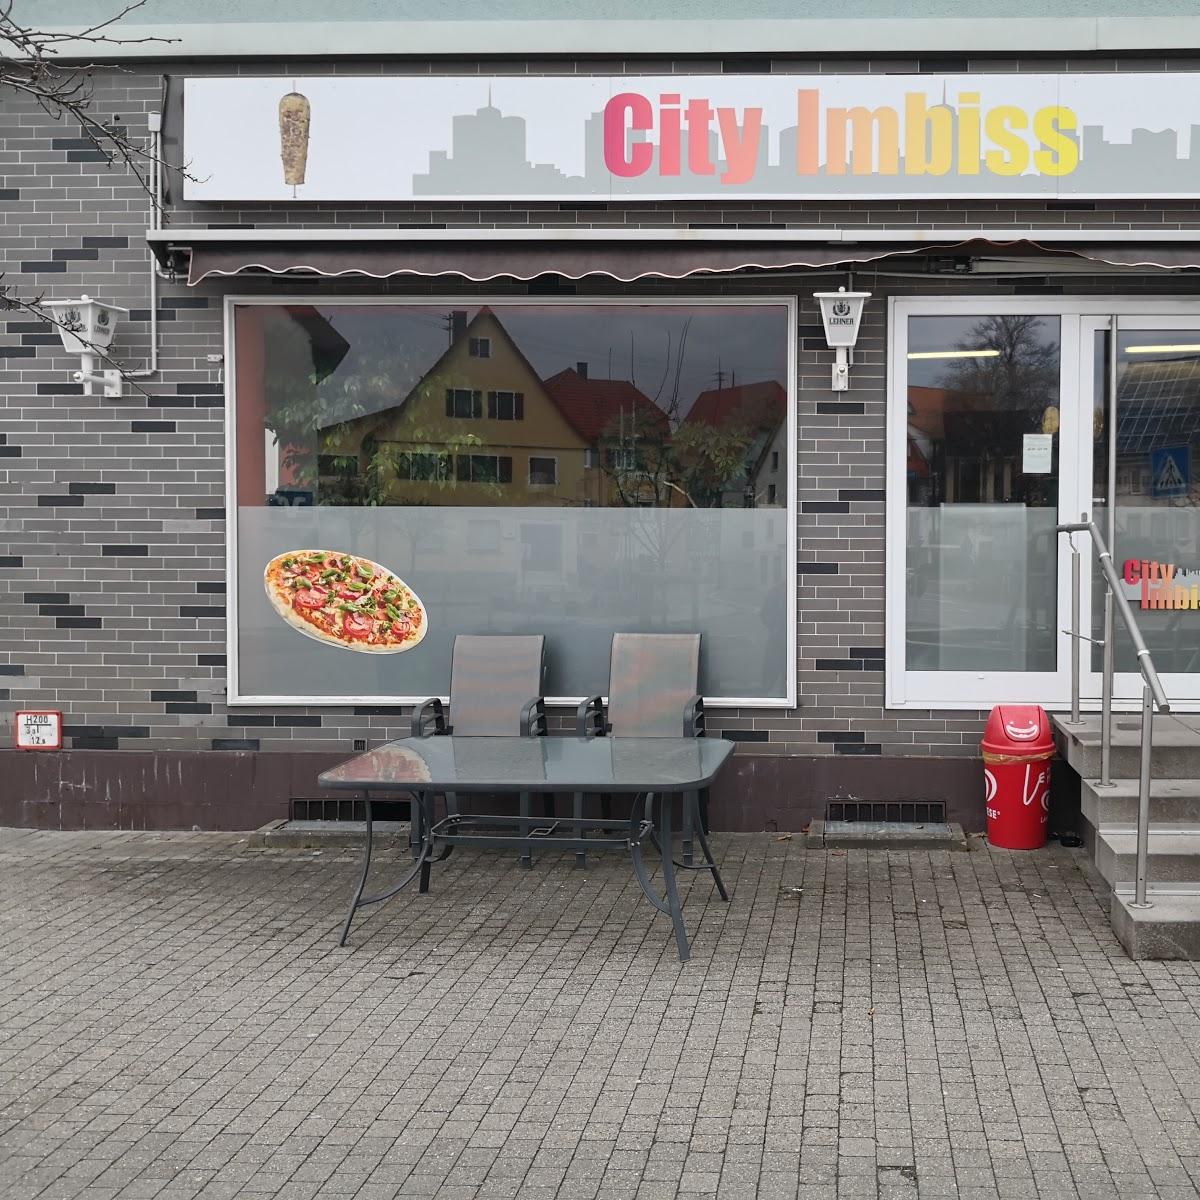 Restaurant "Cityimbiss" in  Rosenfeld